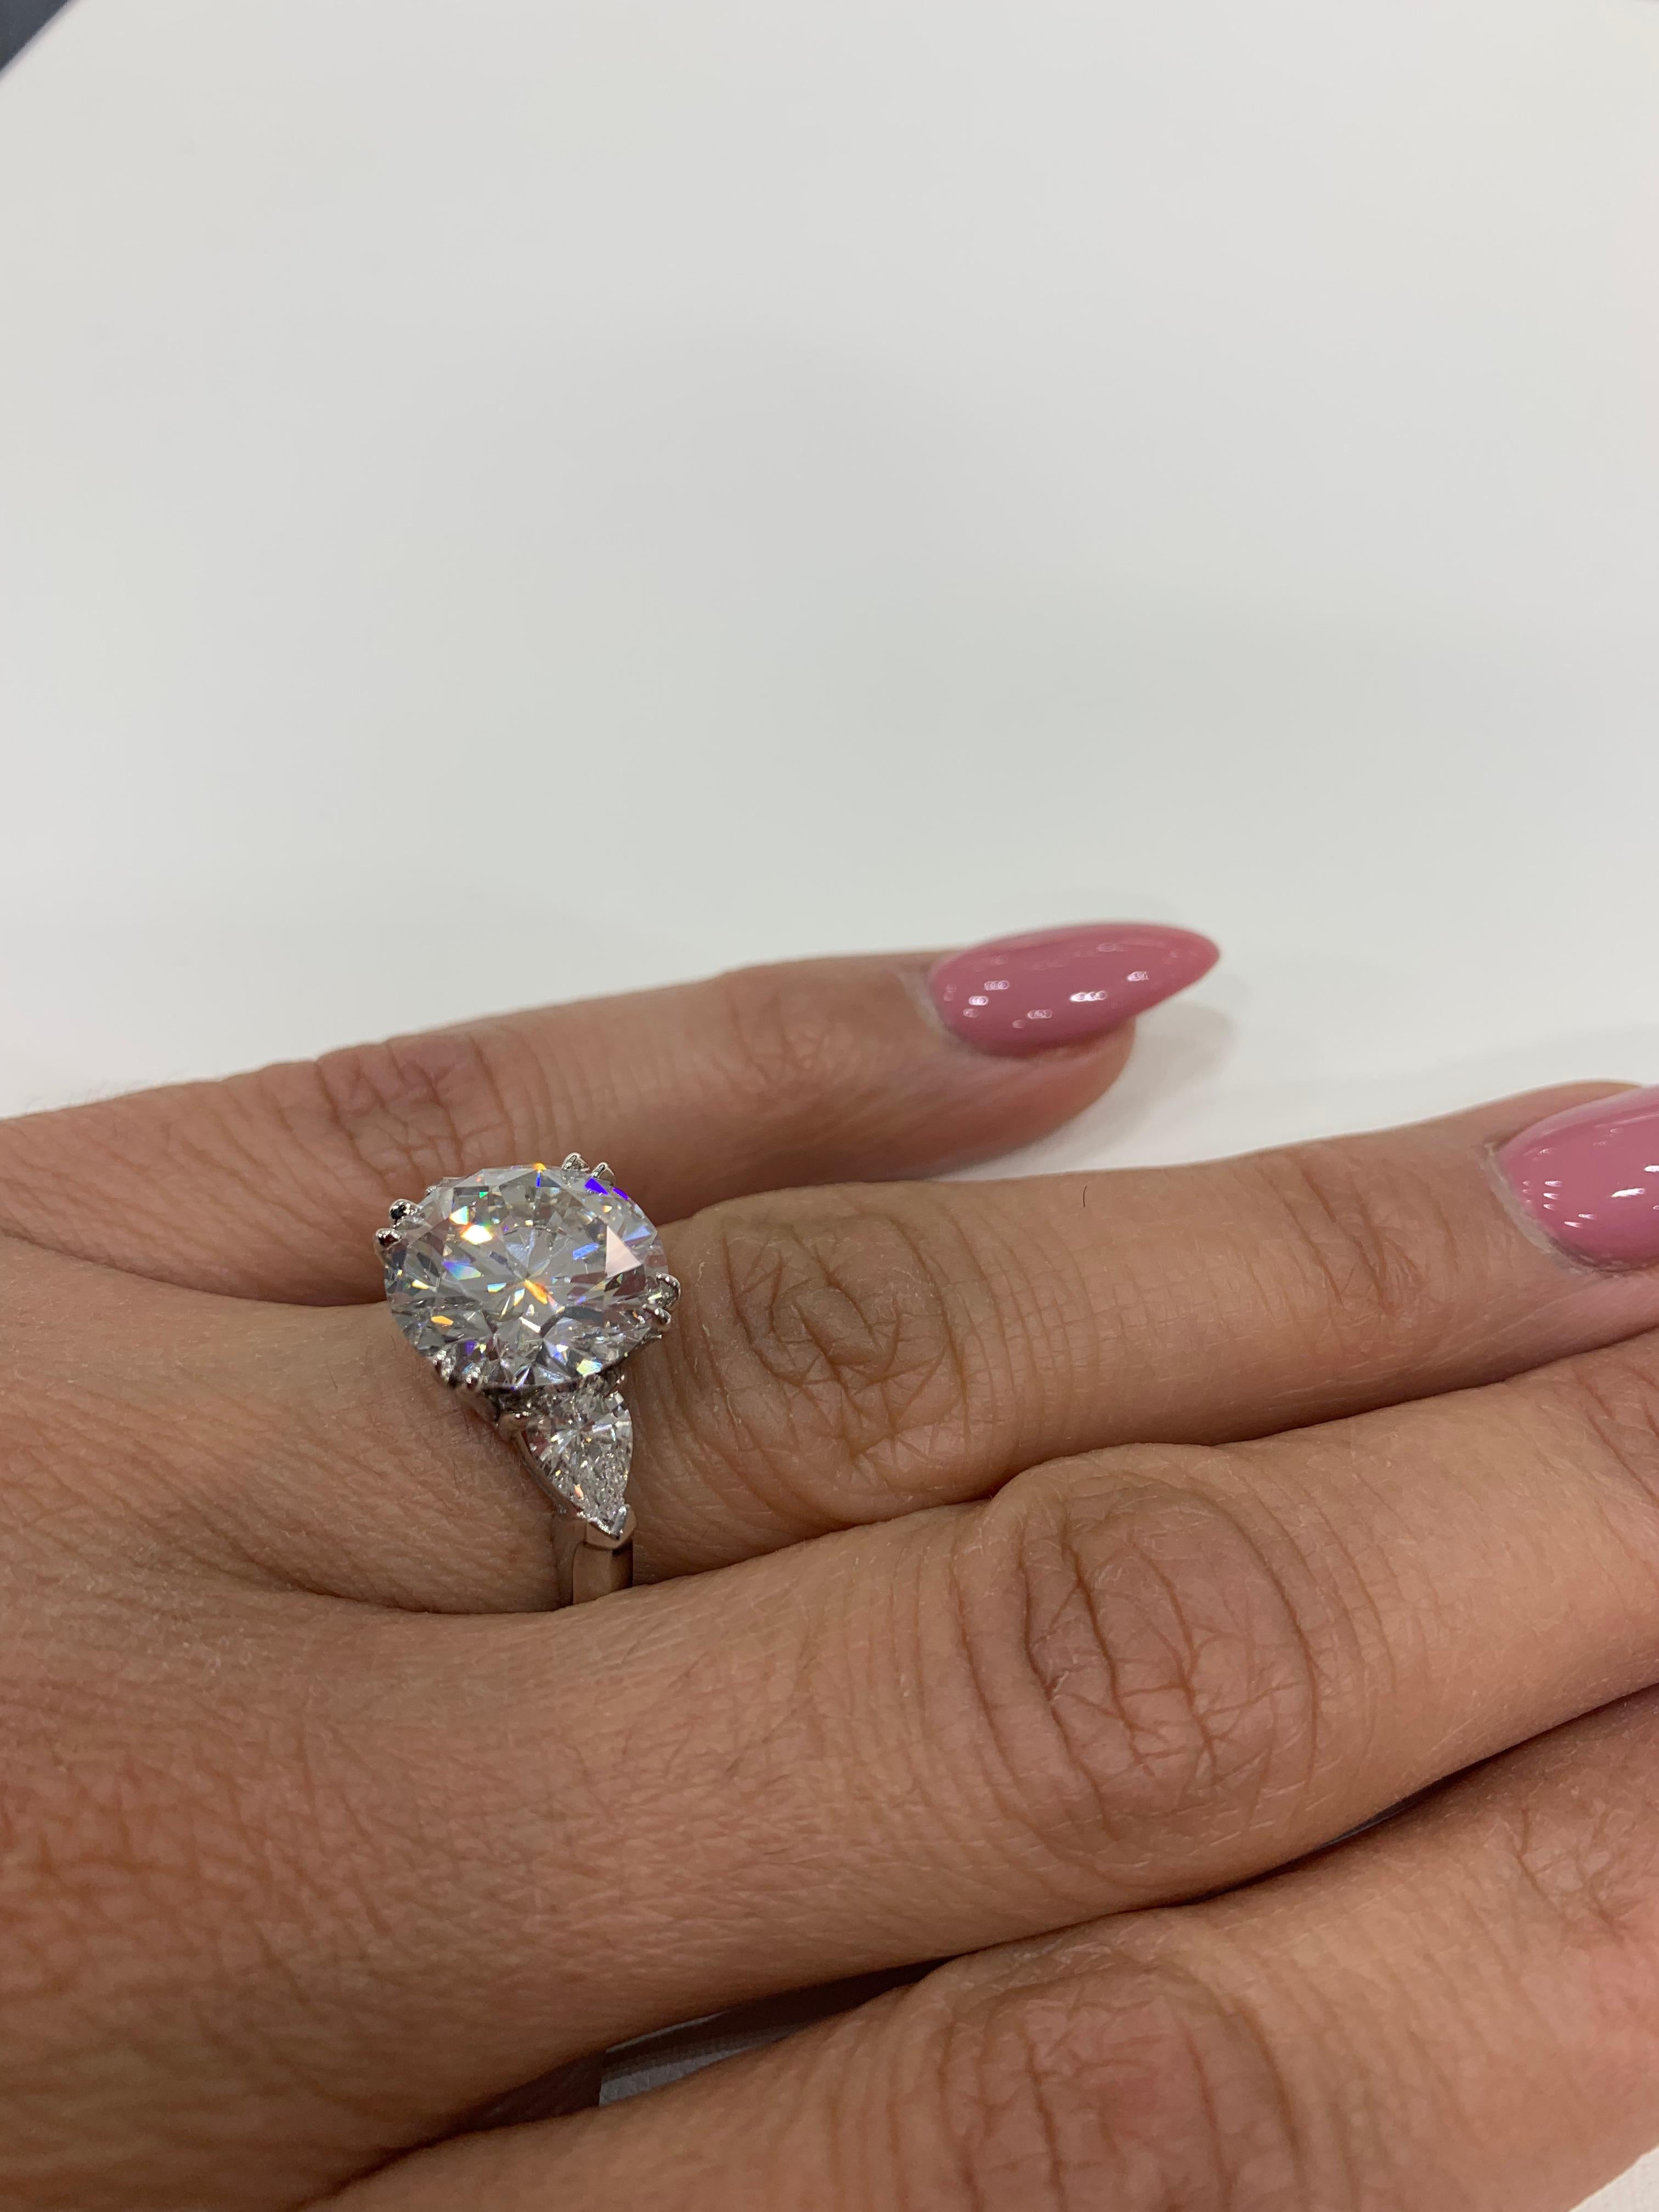 8 carat pear shaped diamond ring